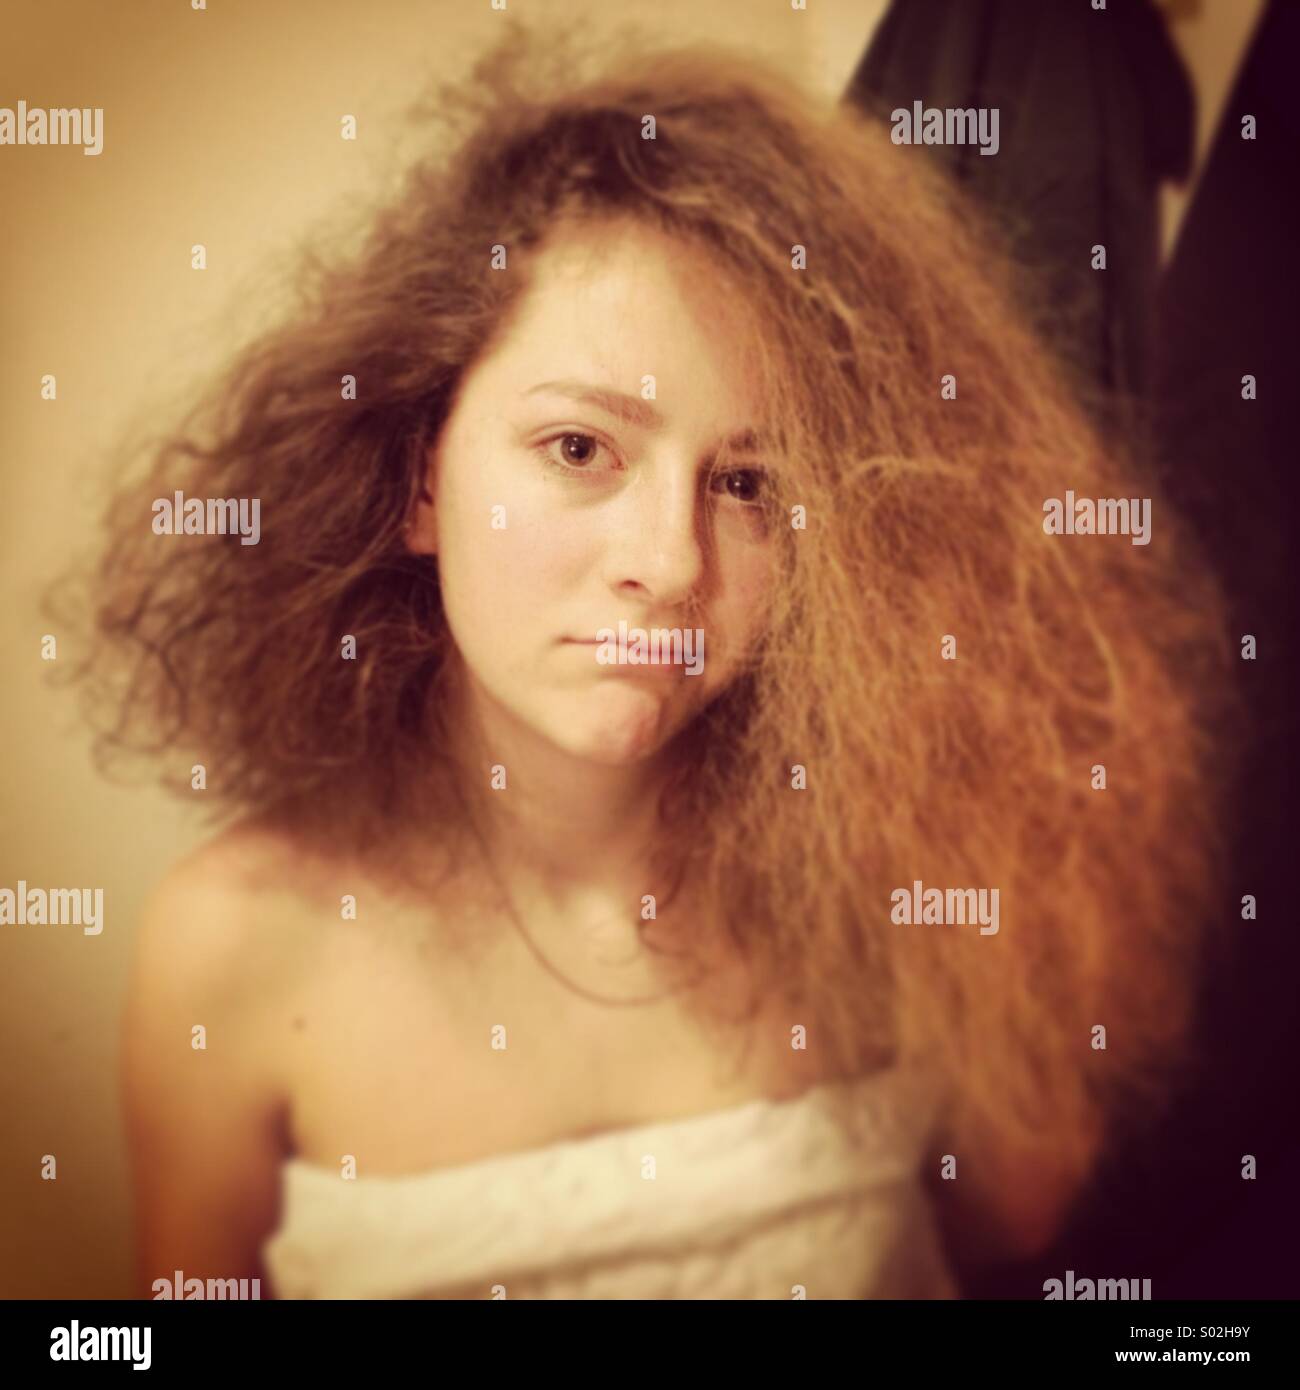 Teenage girl with messy hair Stock Photo